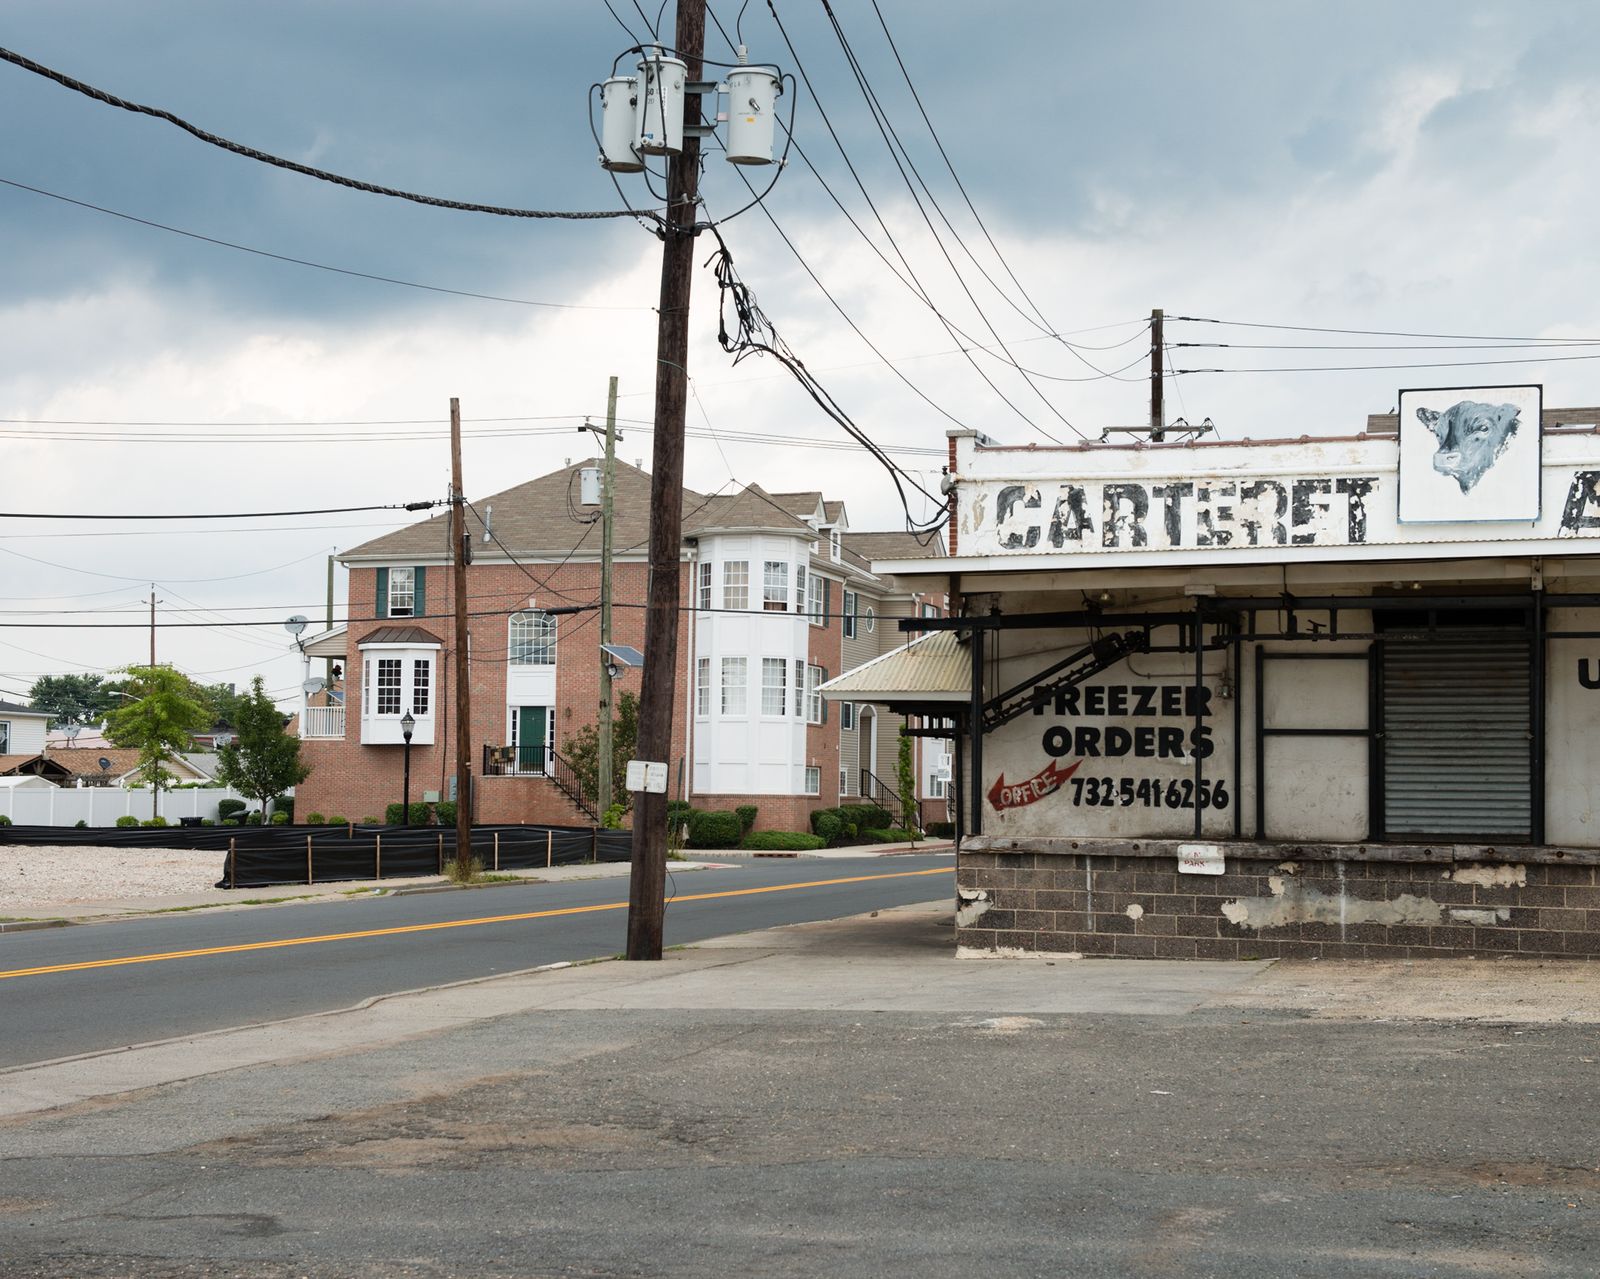 © Martin Toft - Carteret Abattoir, Carteret, New Jersey, United States, 27 July 2014